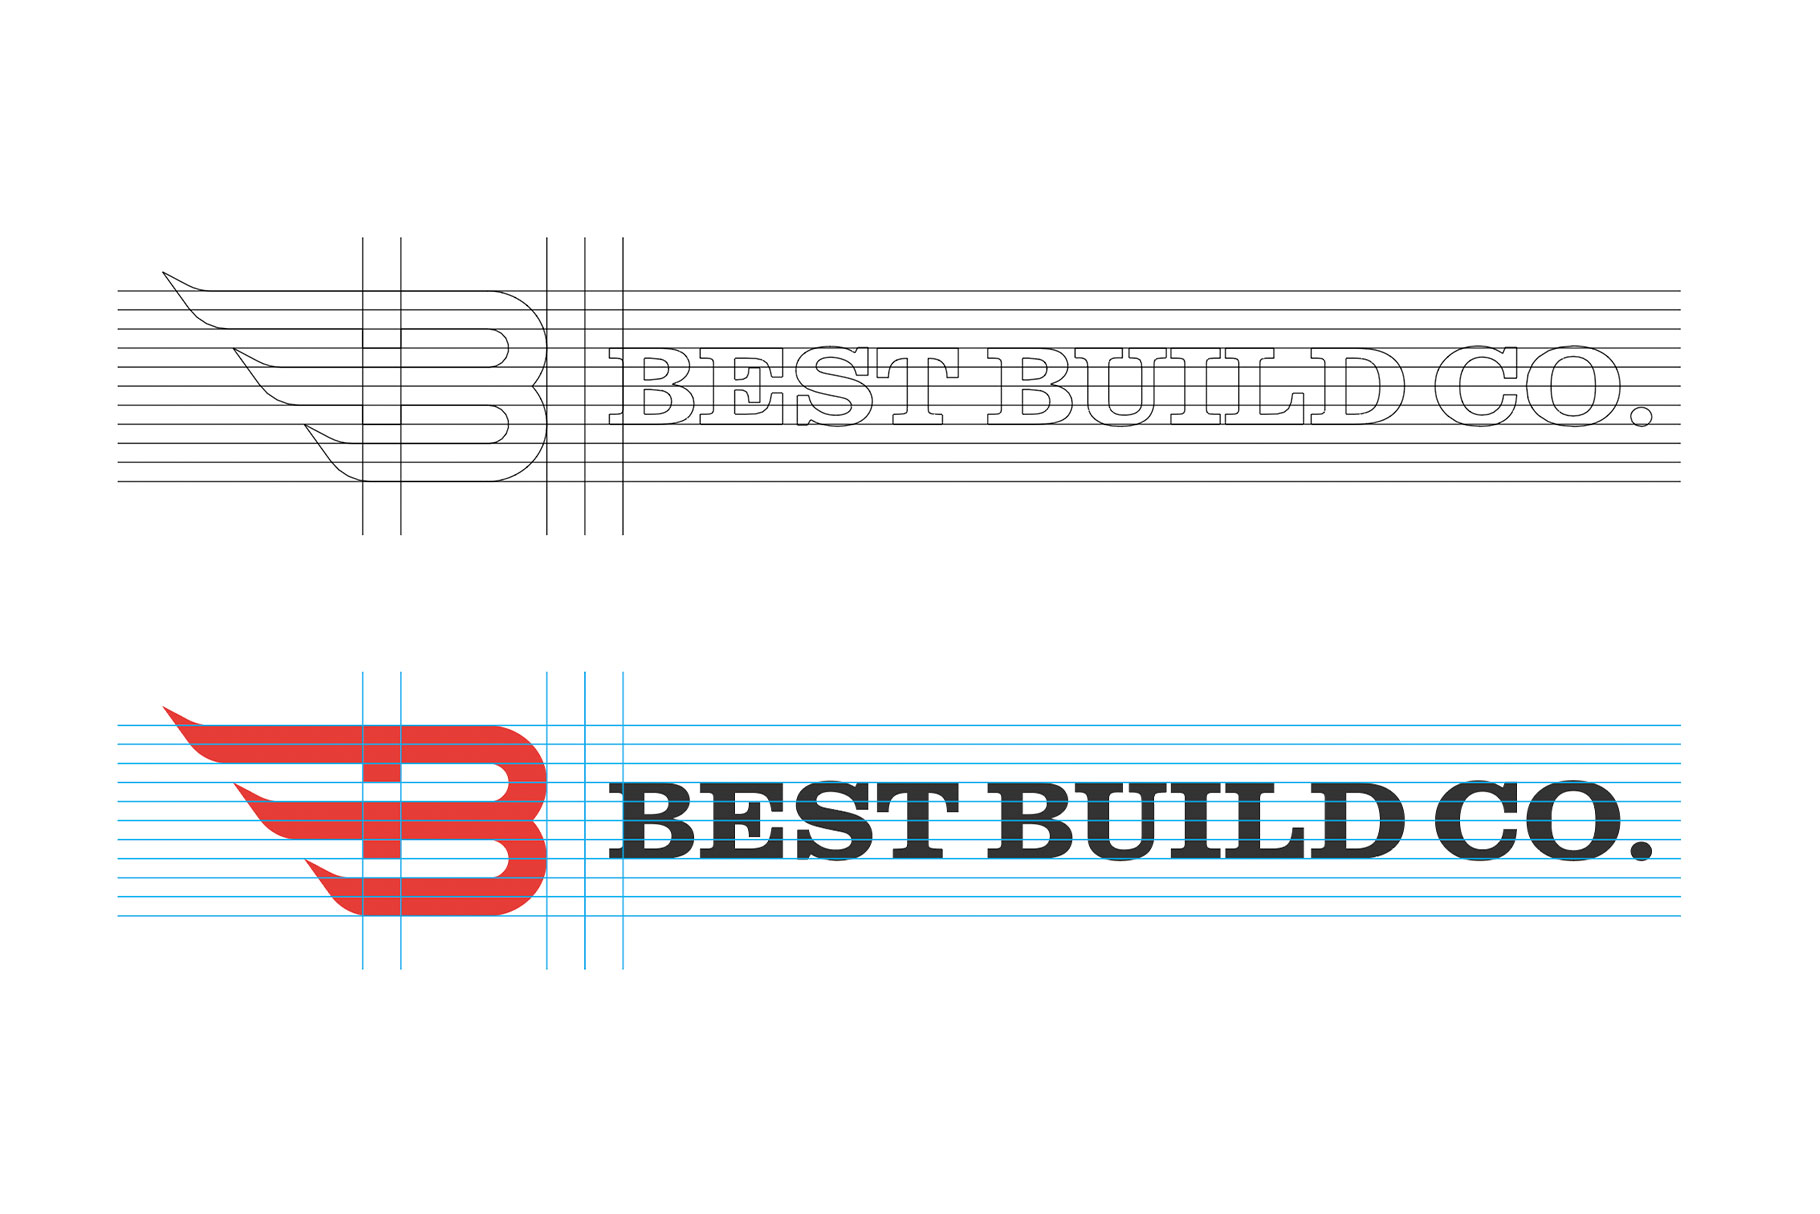 Best Build Co. logo alignment